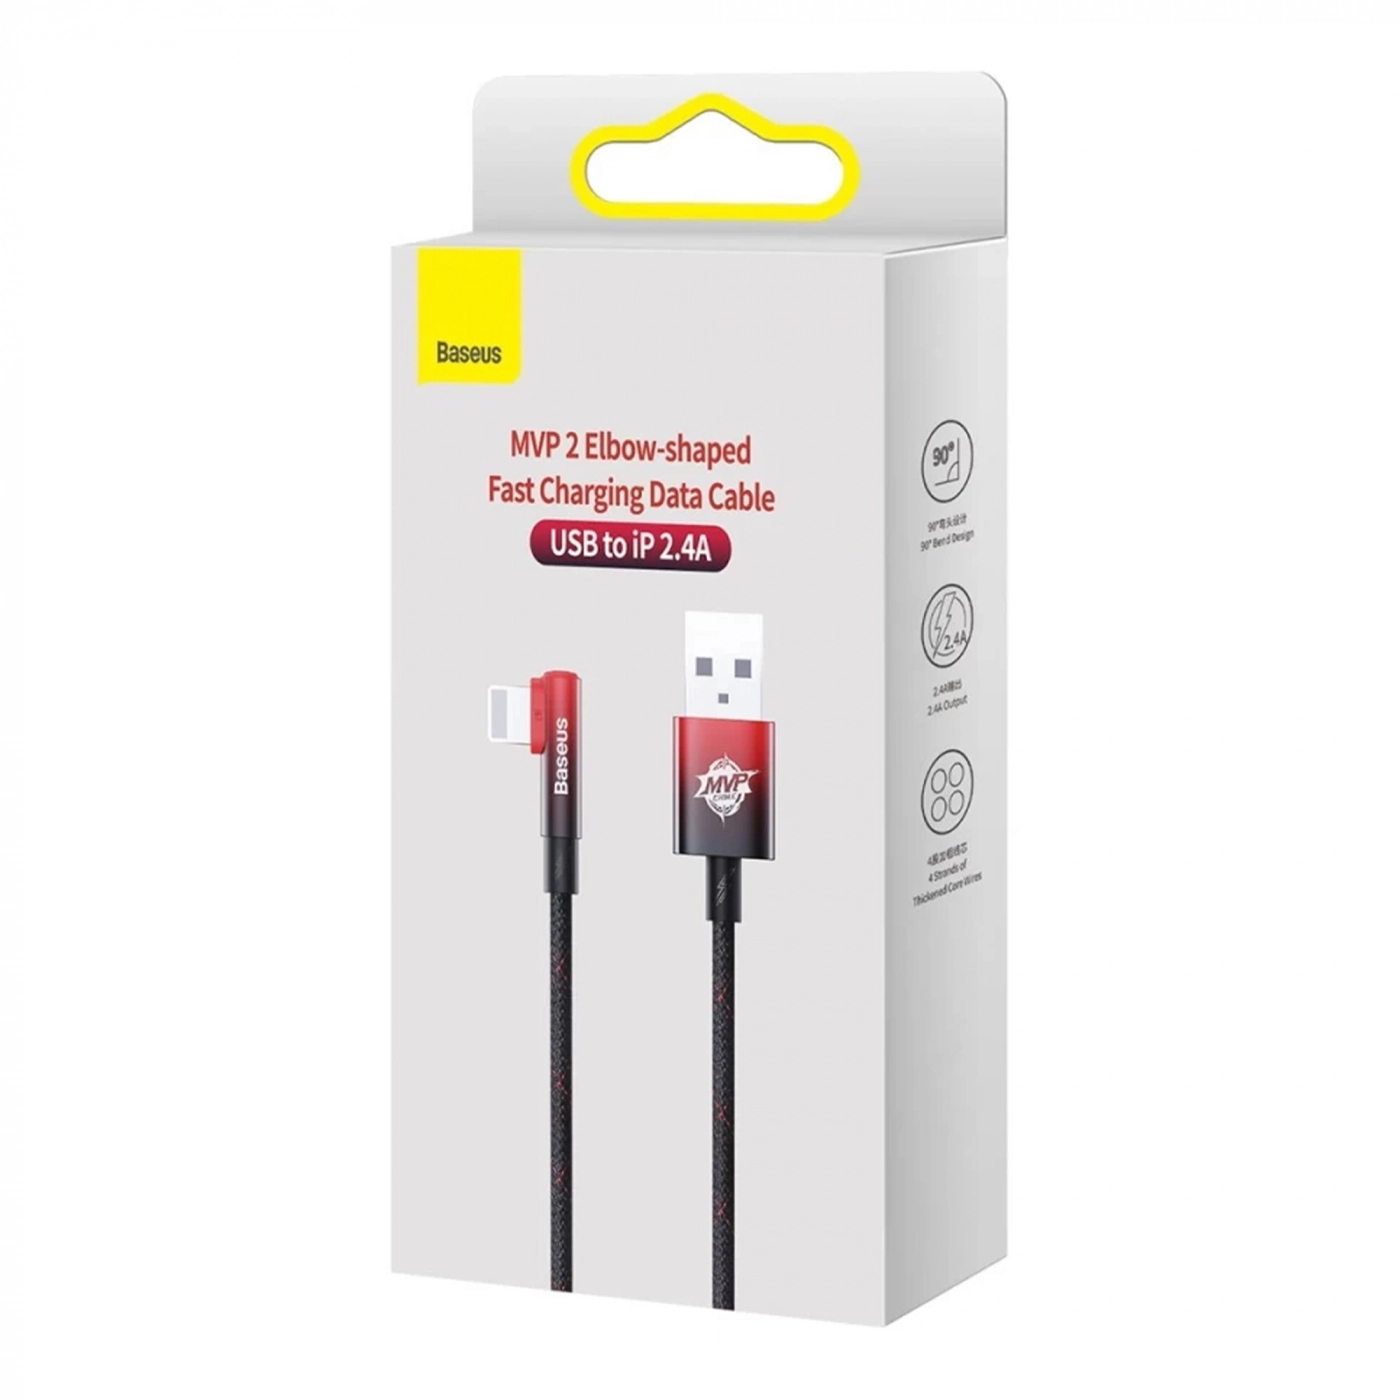 Купить Кабель Baseus MVP 2 Elbow-shaped Fast Charging Data Cable USB to iP 2.4A 1m Black|Red - фото 8